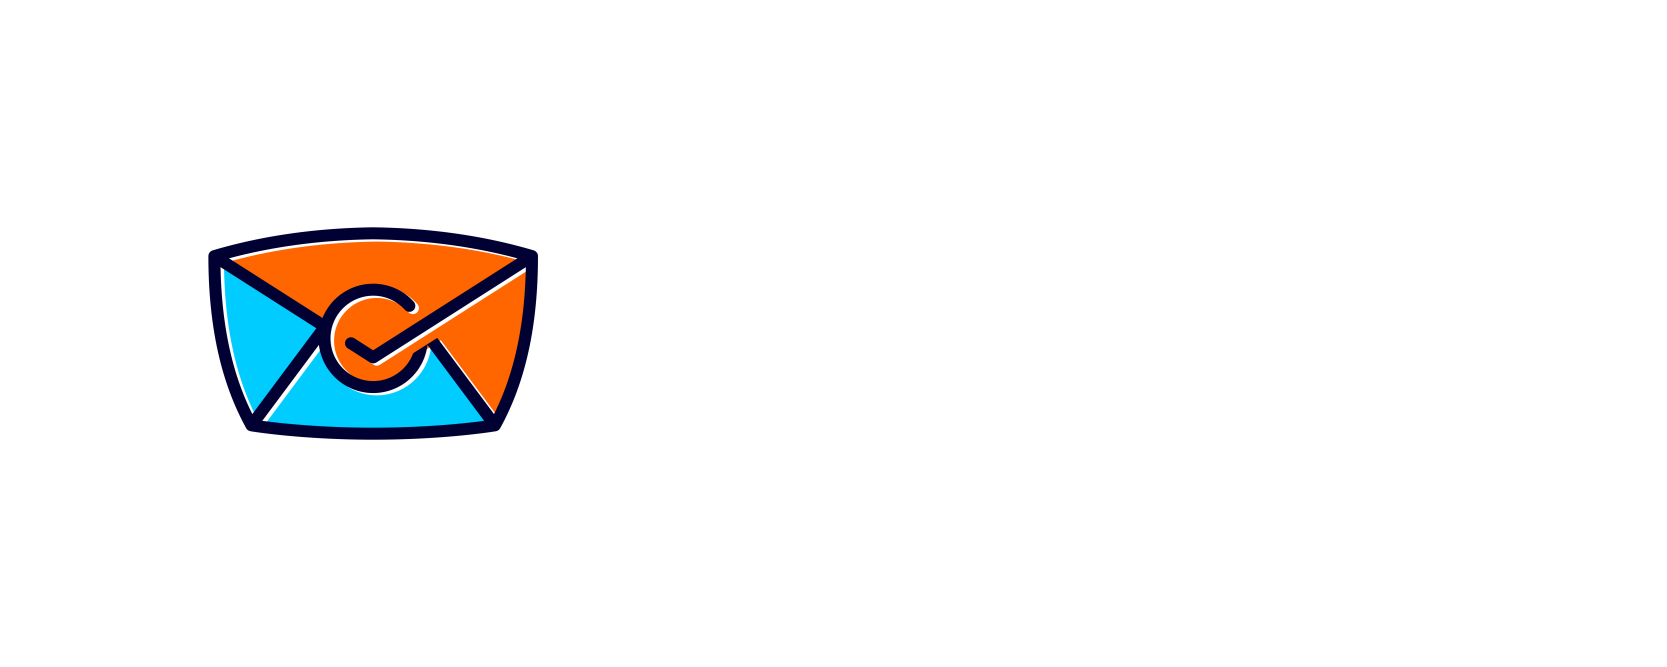 ValidEmail logo